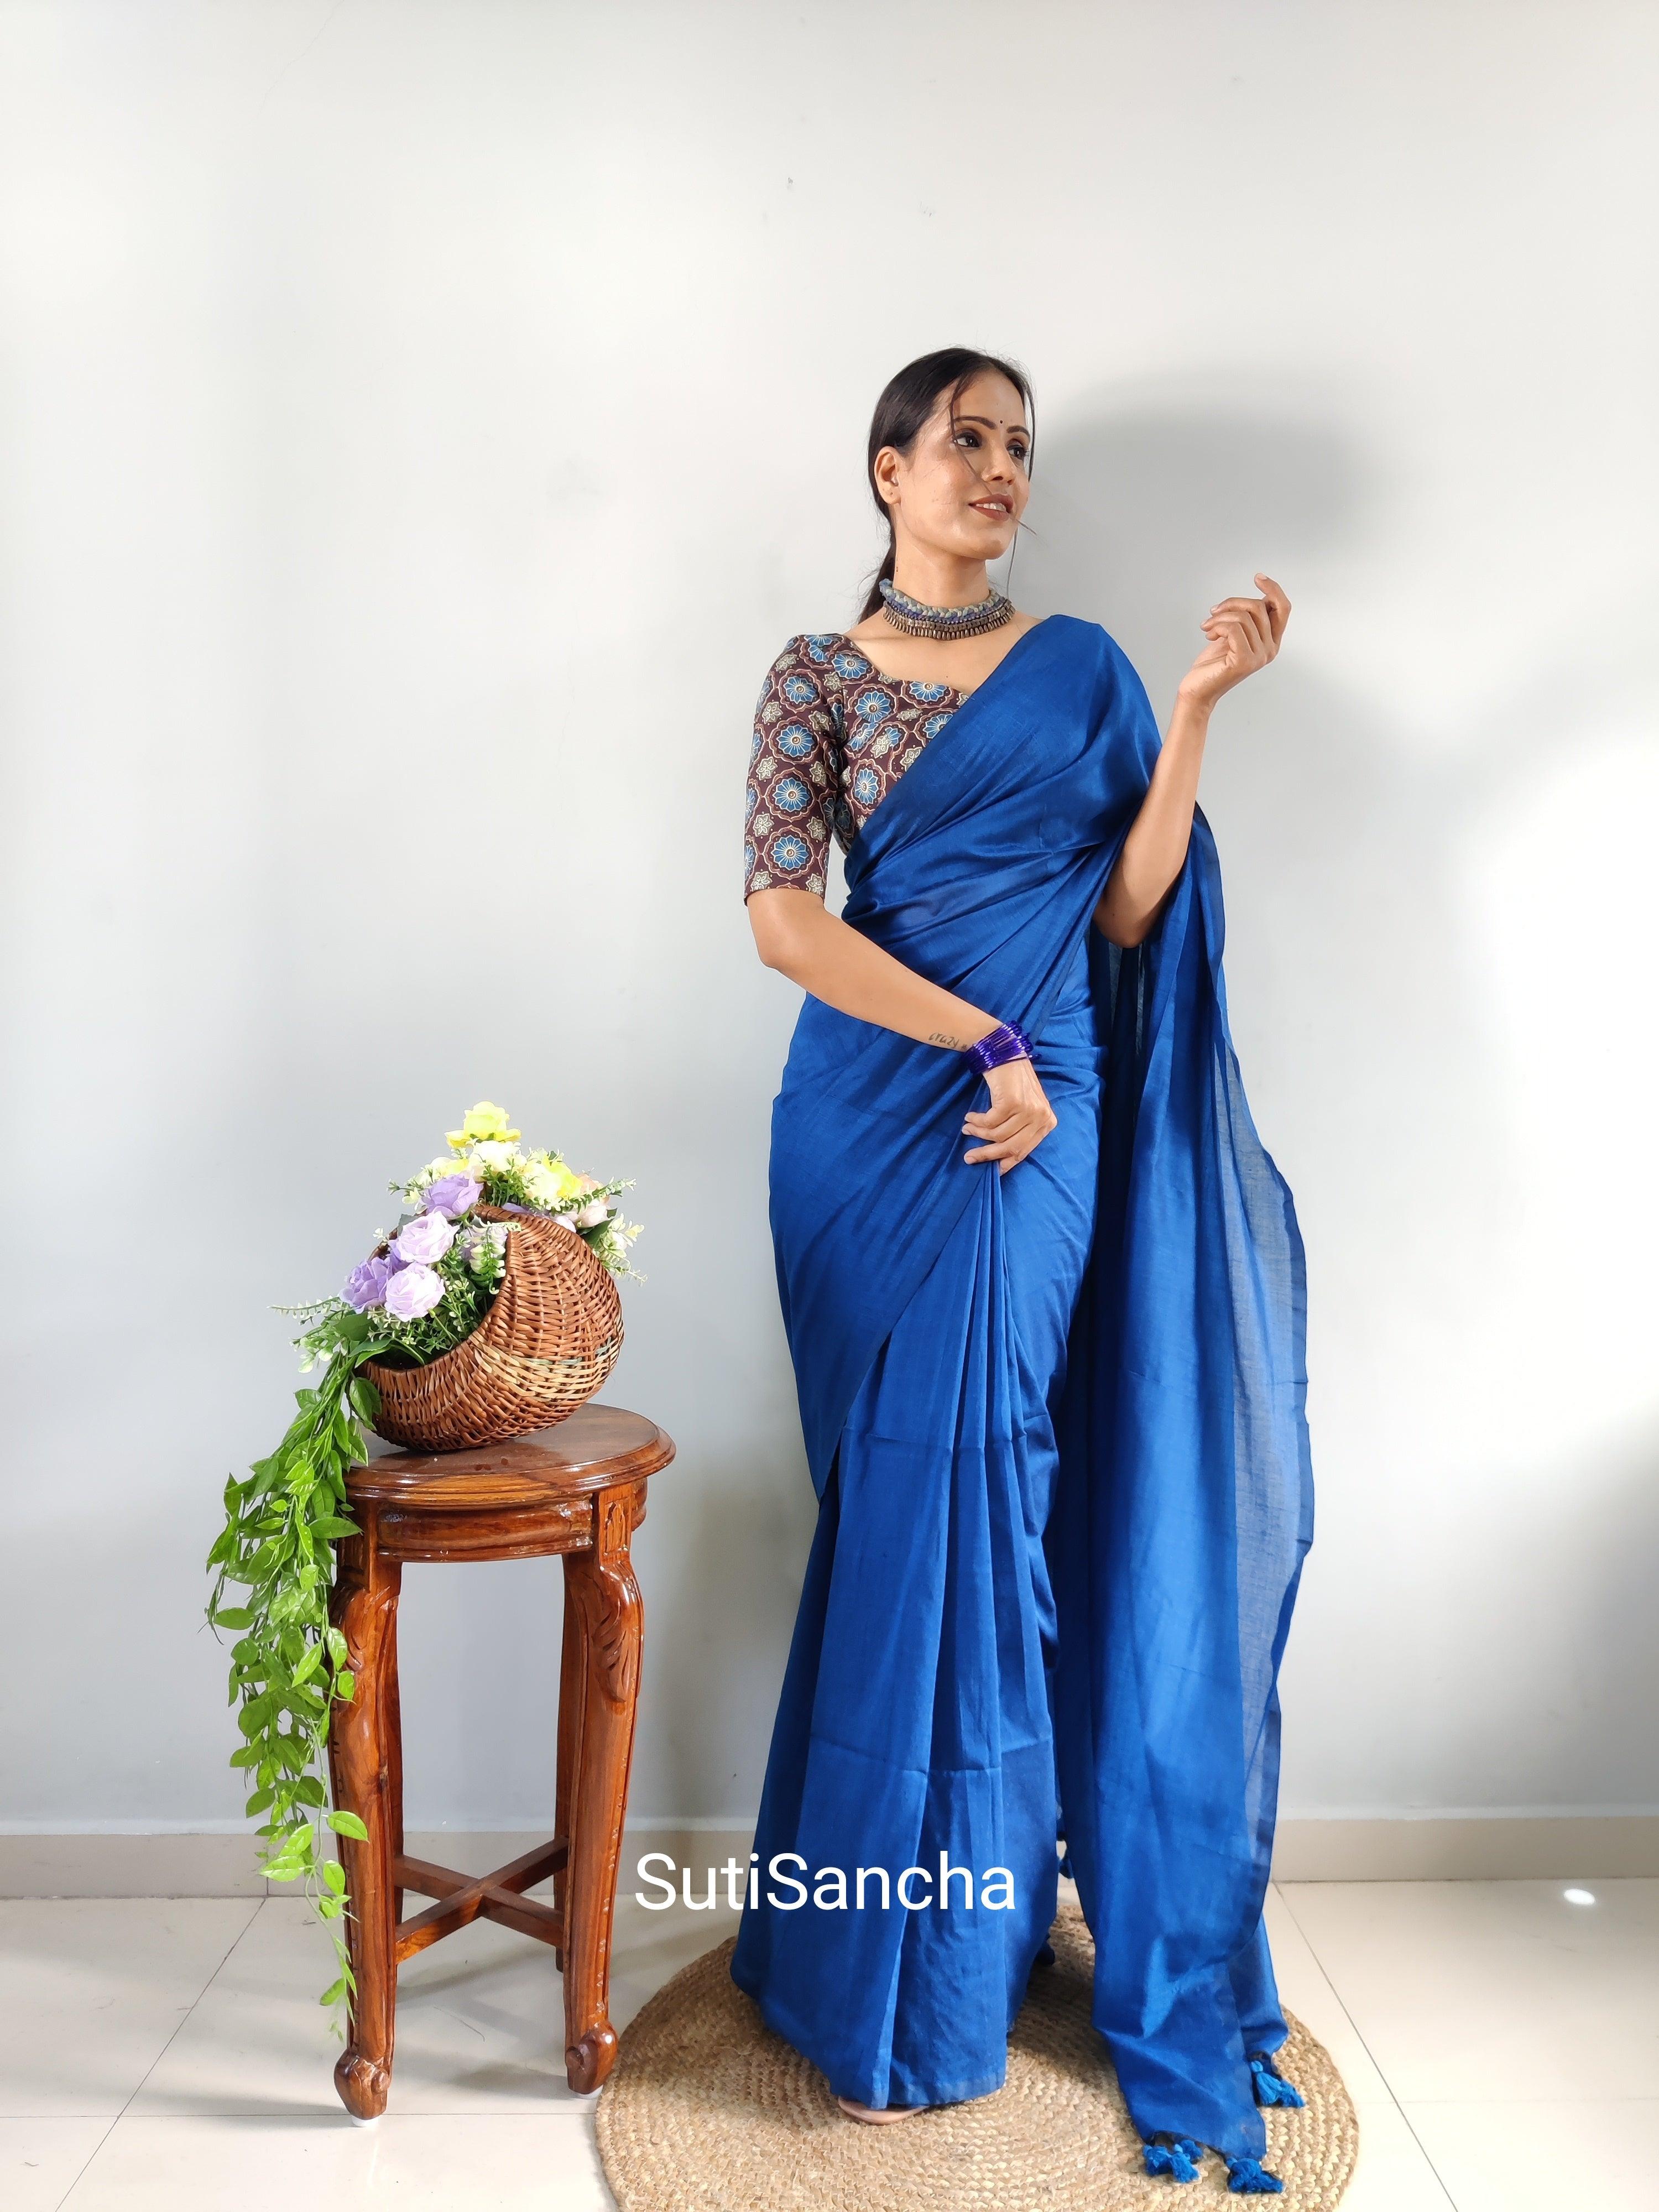 Sutisancha indigoblue Khadi Saree & designer Blouse - Suti Sancha